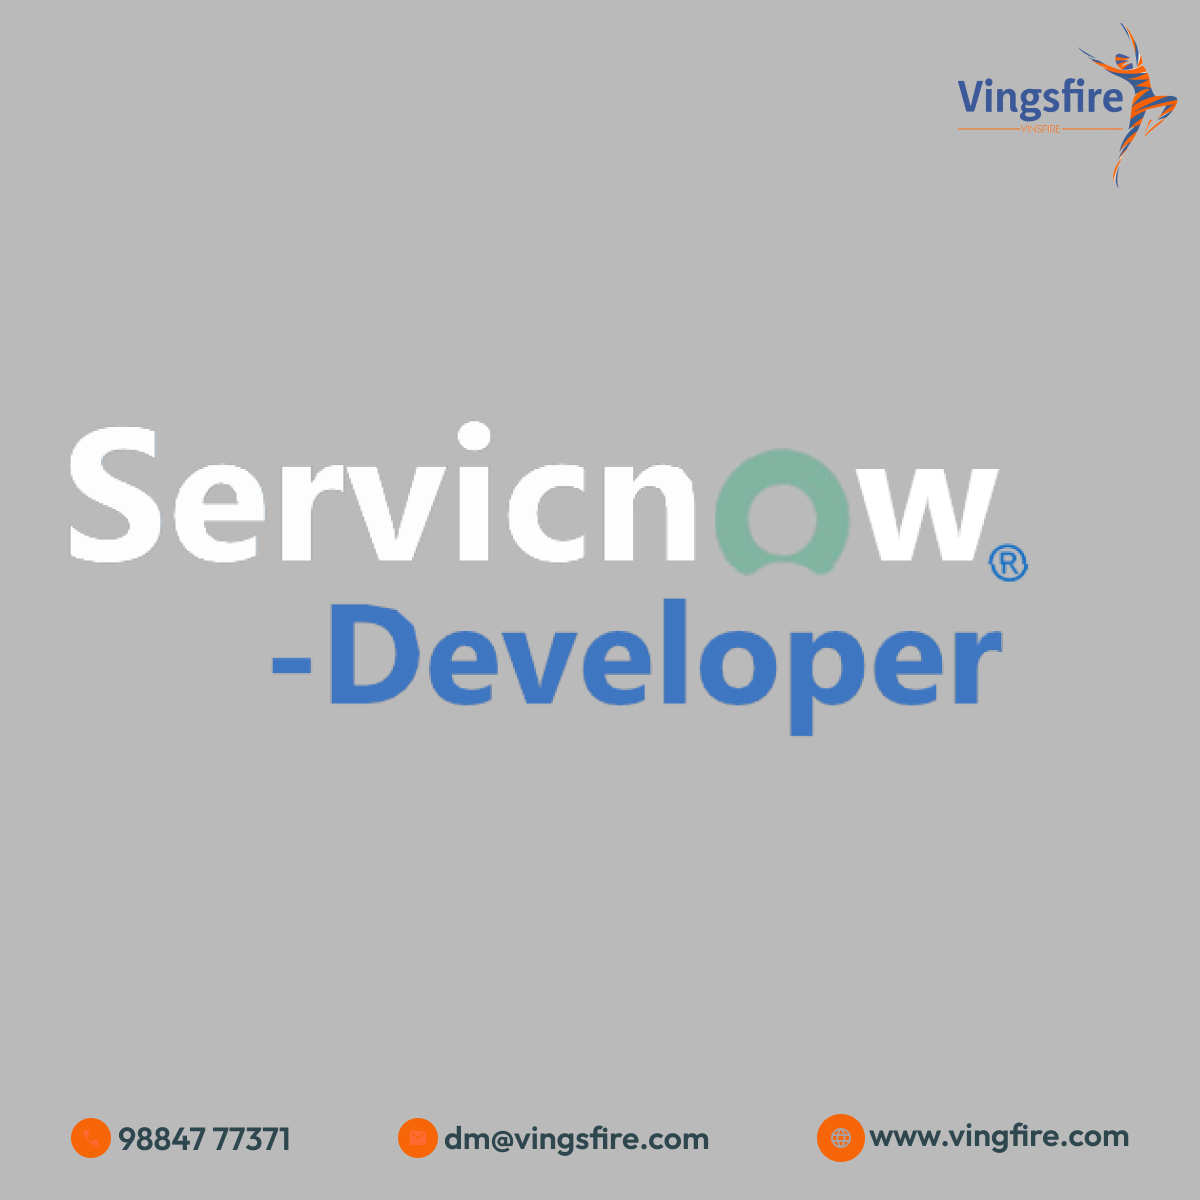 Developer Service now